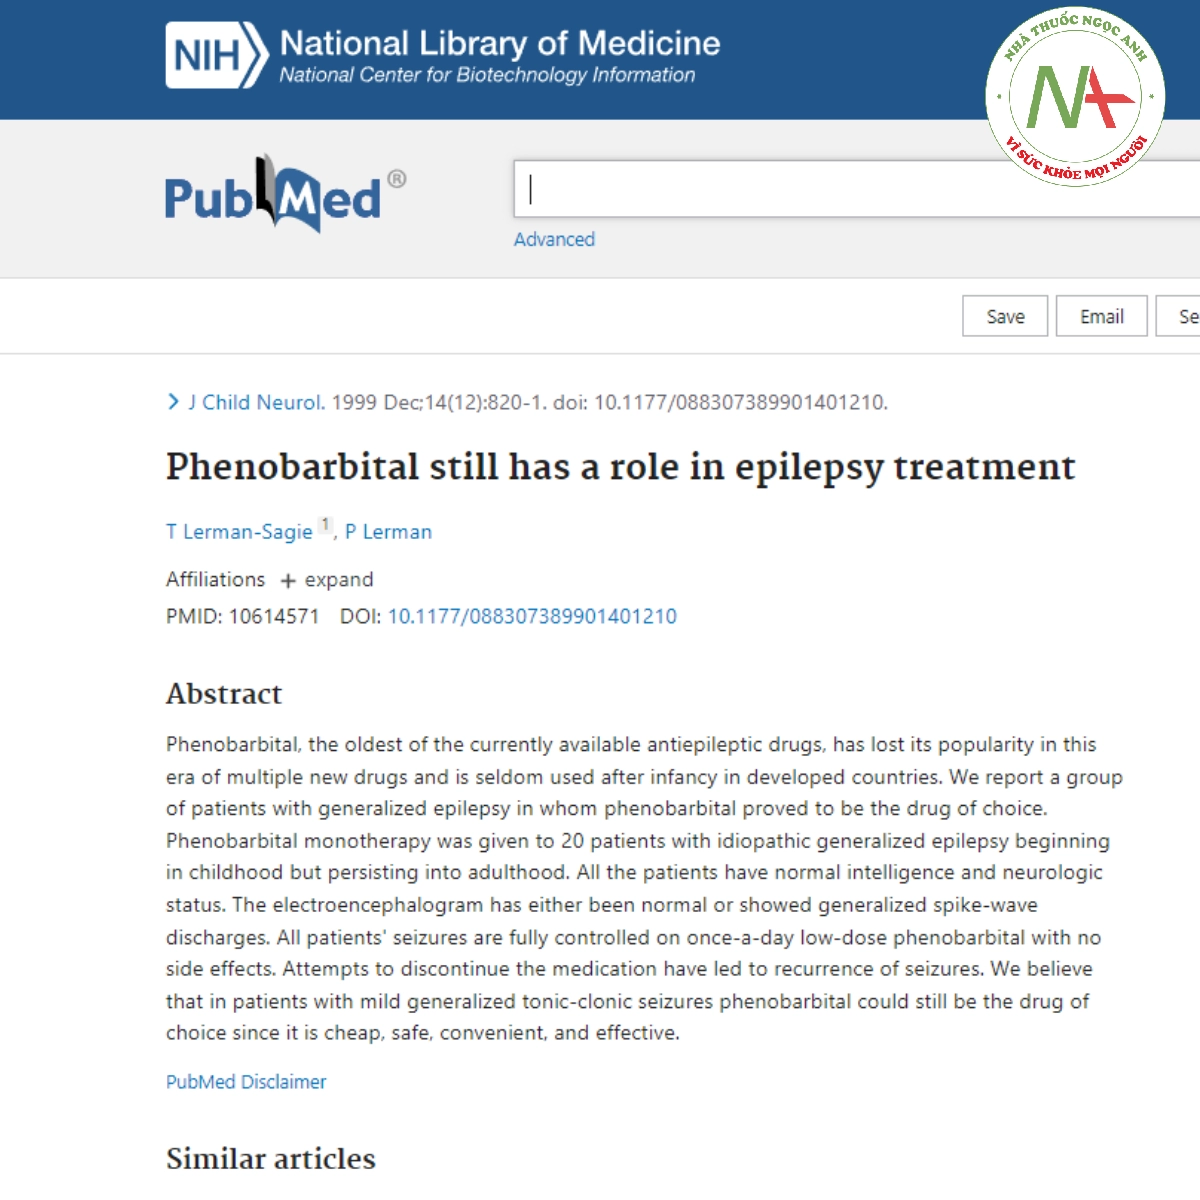 Phenobarbital still has a role in epilepsy treatment